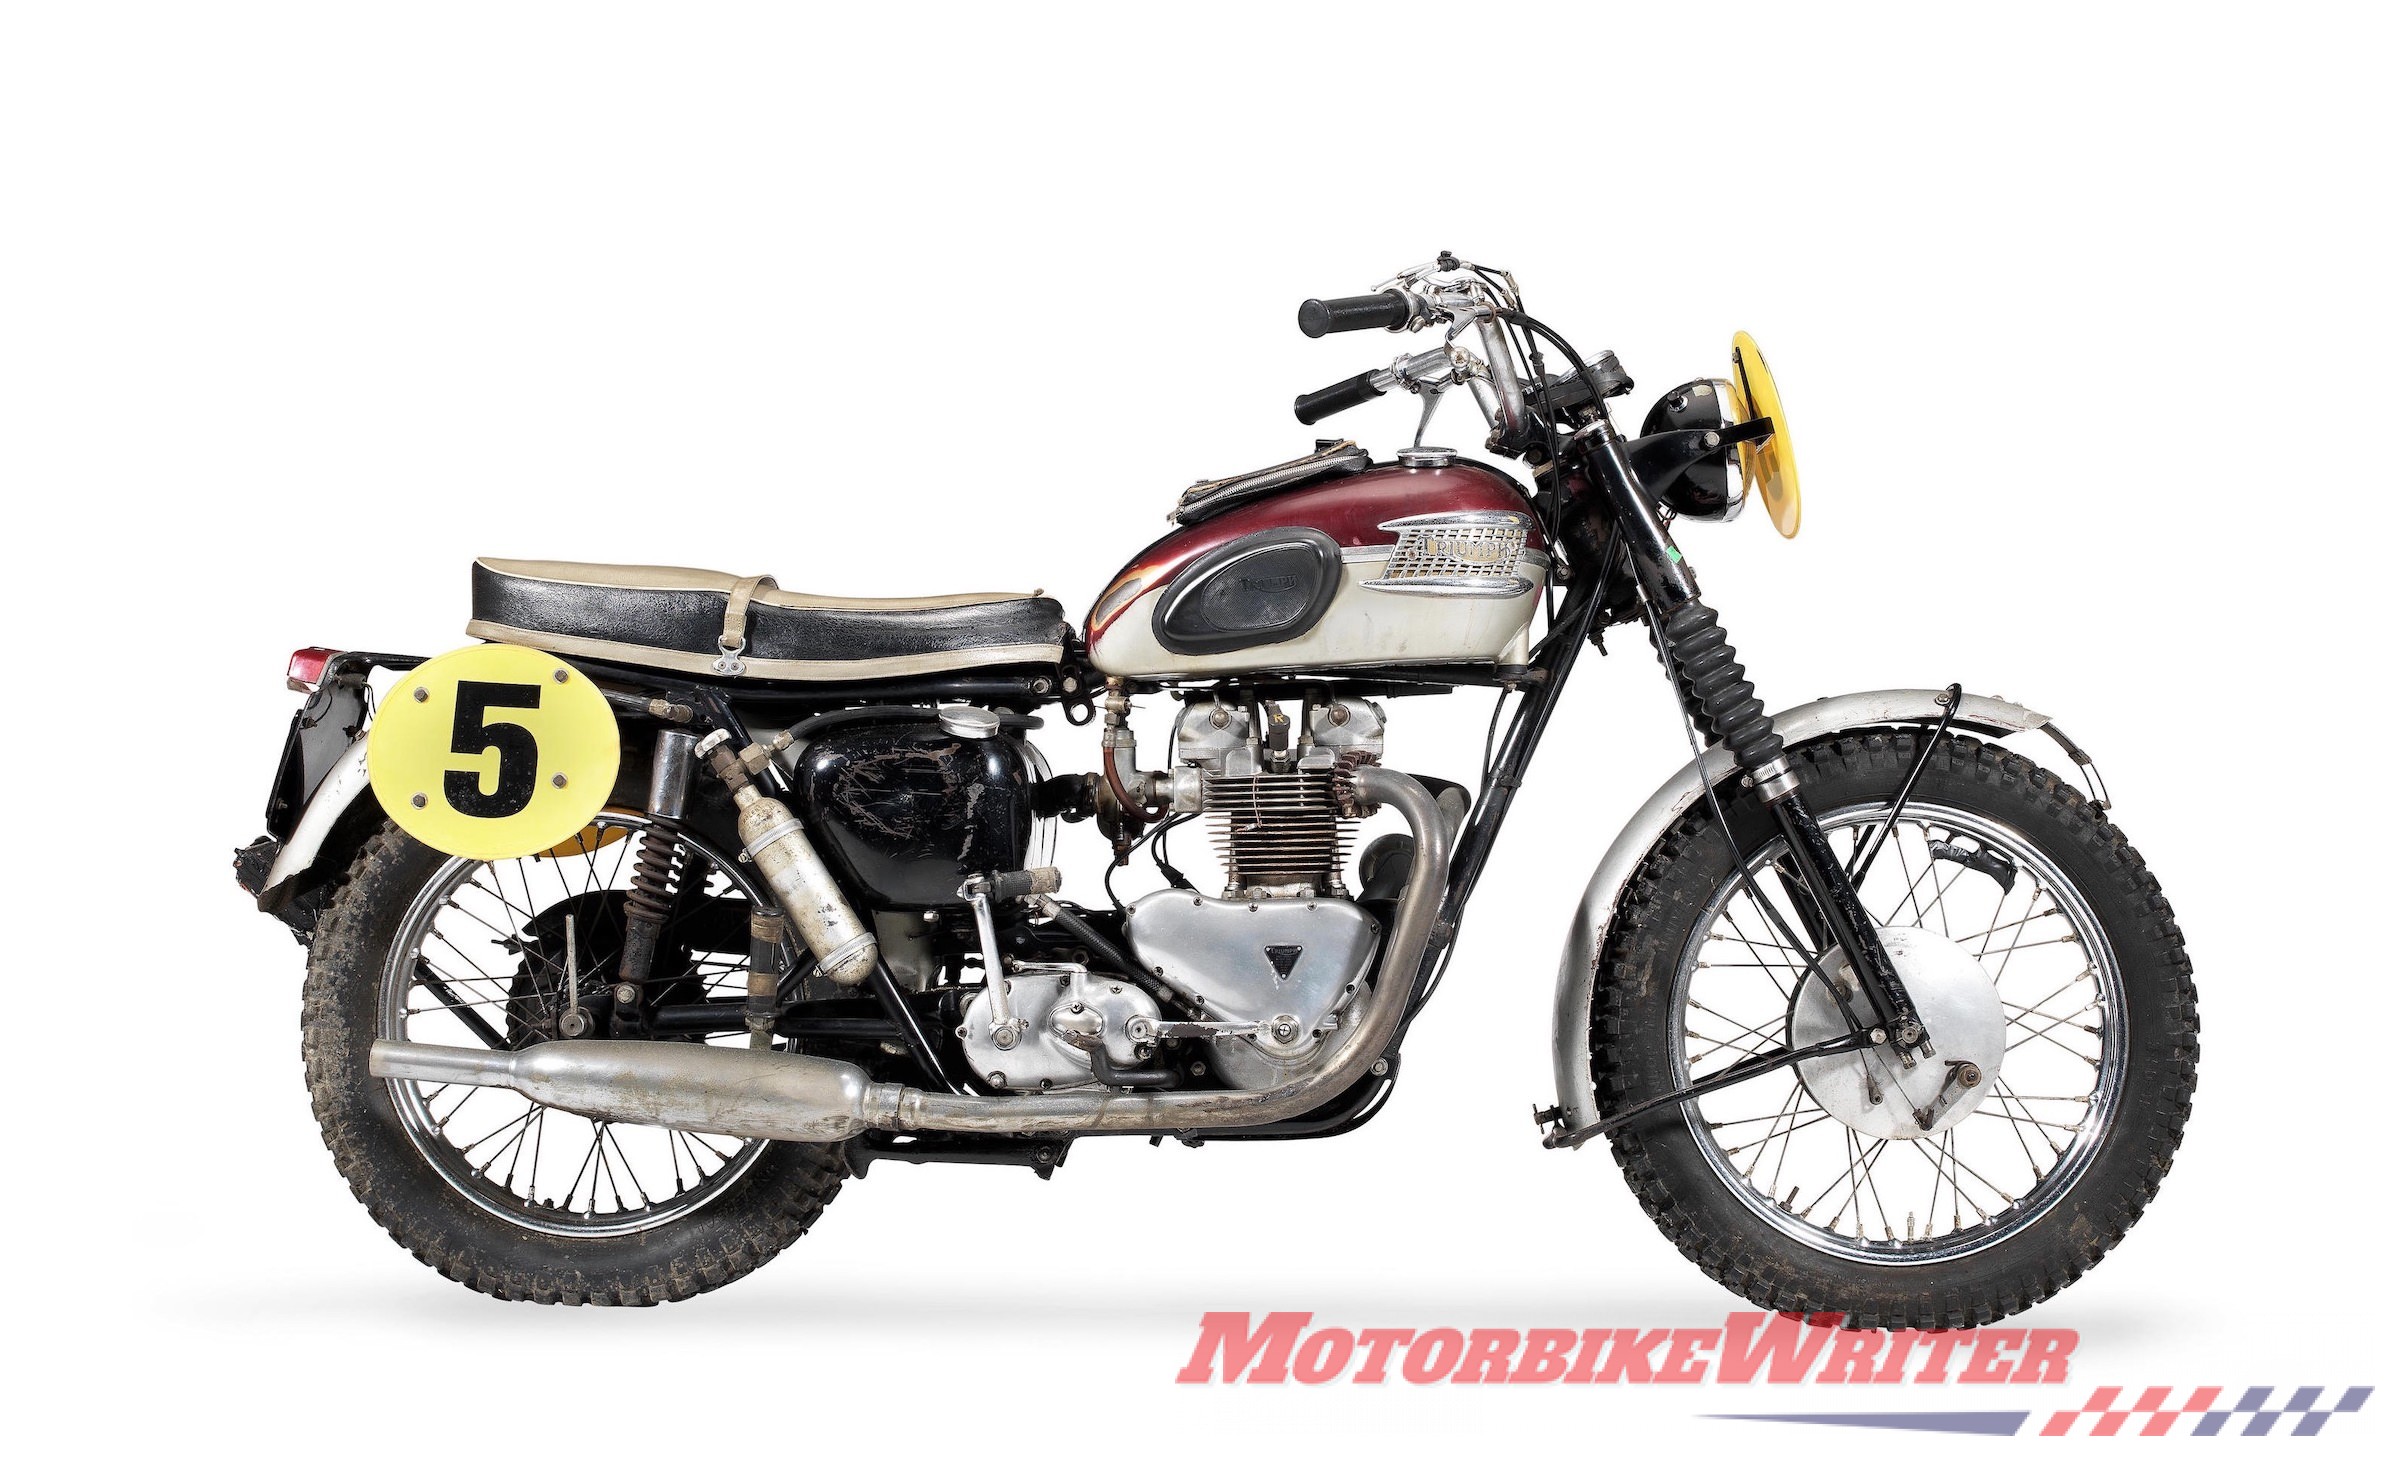 Bud Ekins Great Escape Steve McQuun desert sled triumph motorcycles TR6 record auction